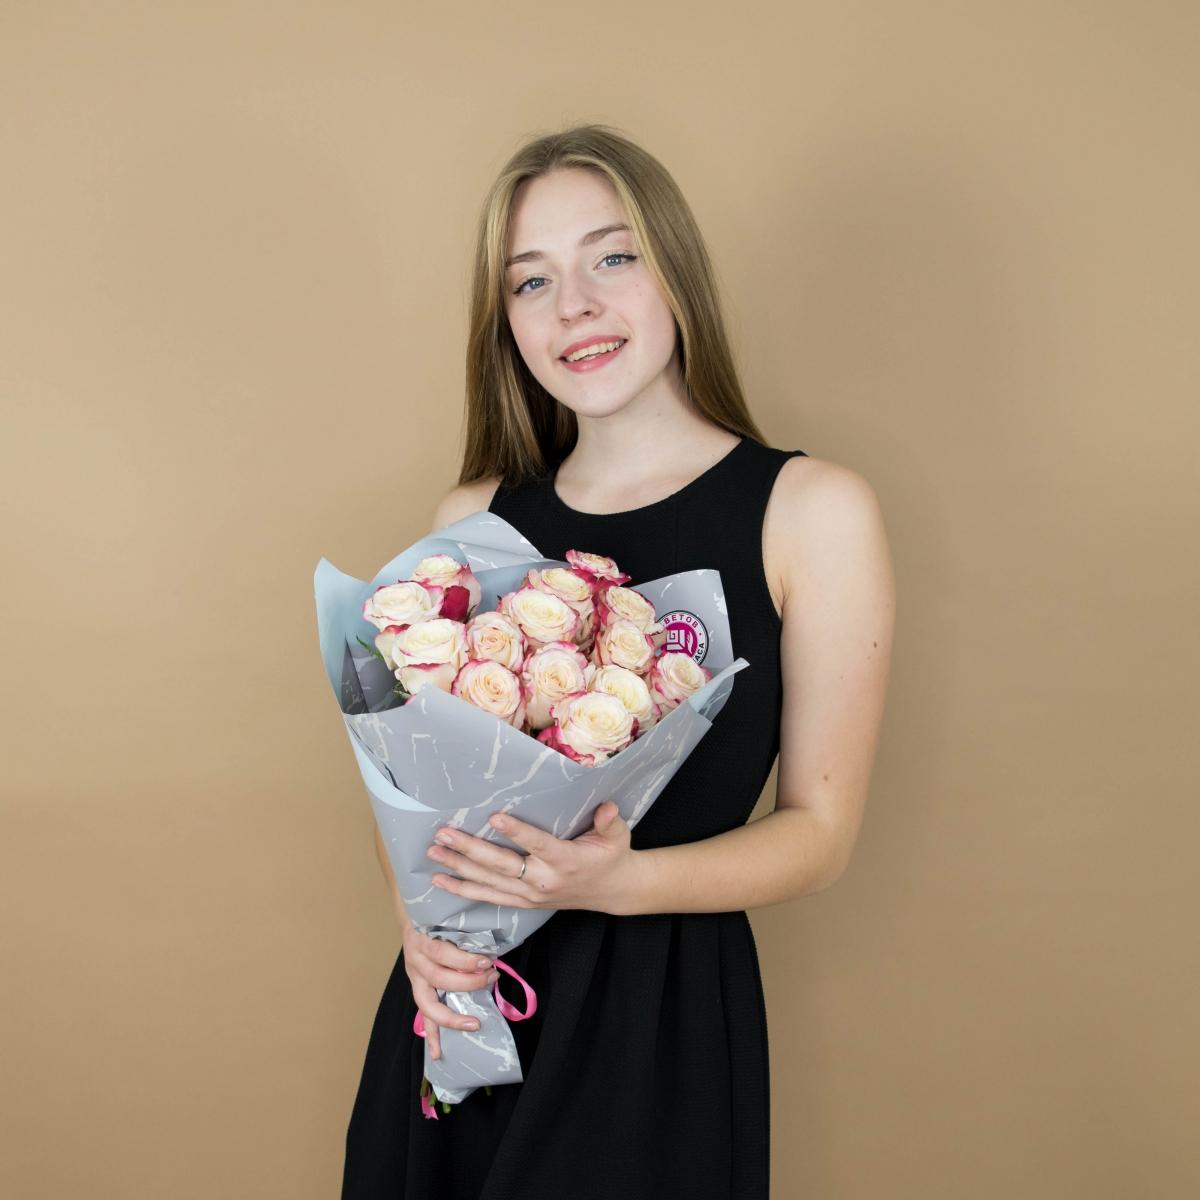 Розы красно-белые 15 шт 40 см (Эквадор) артикул букета: 84480